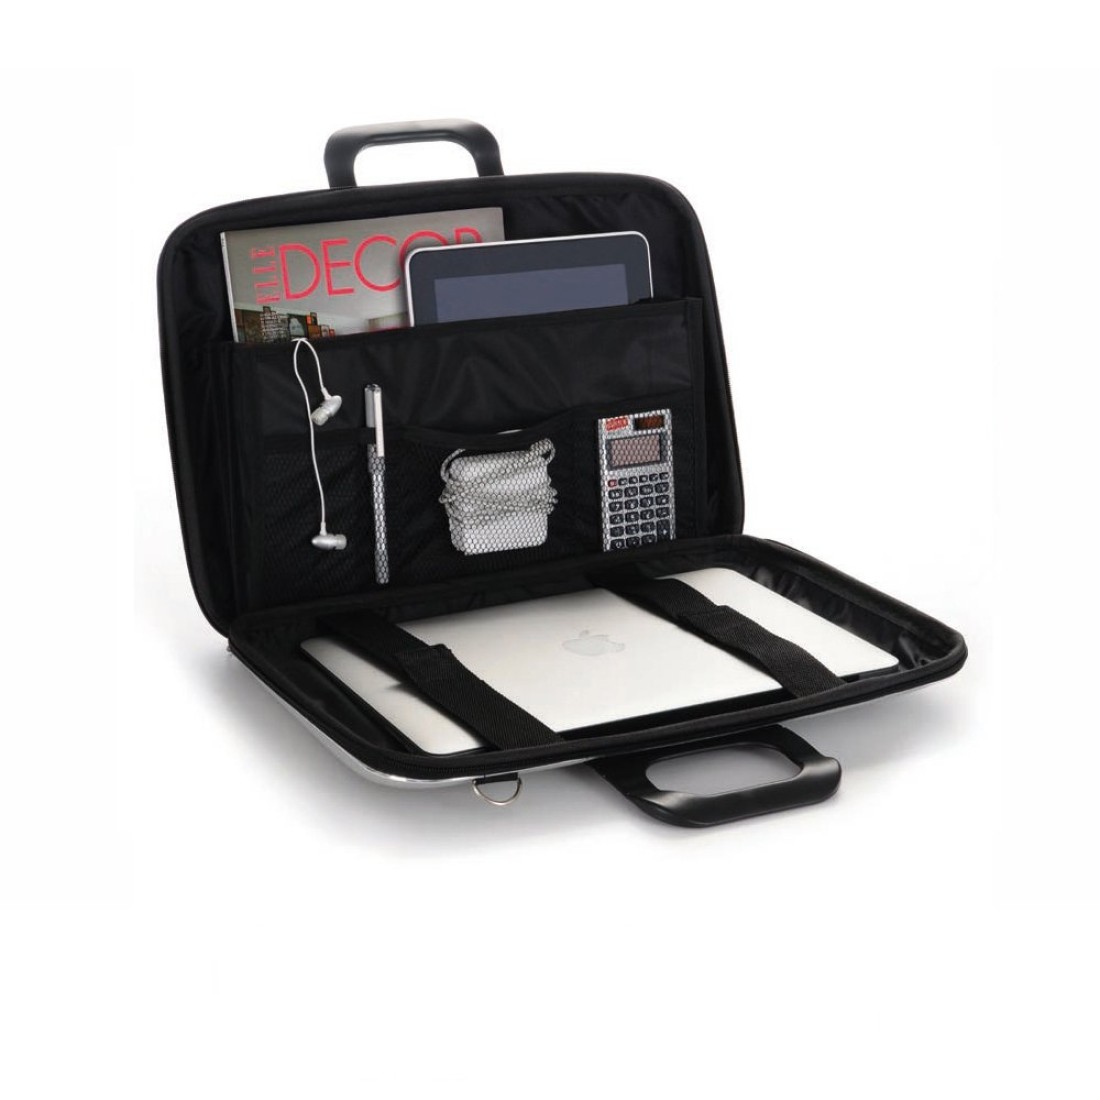 Bombata Medio Classic Nylon (13'') Red Laptop Briefcase